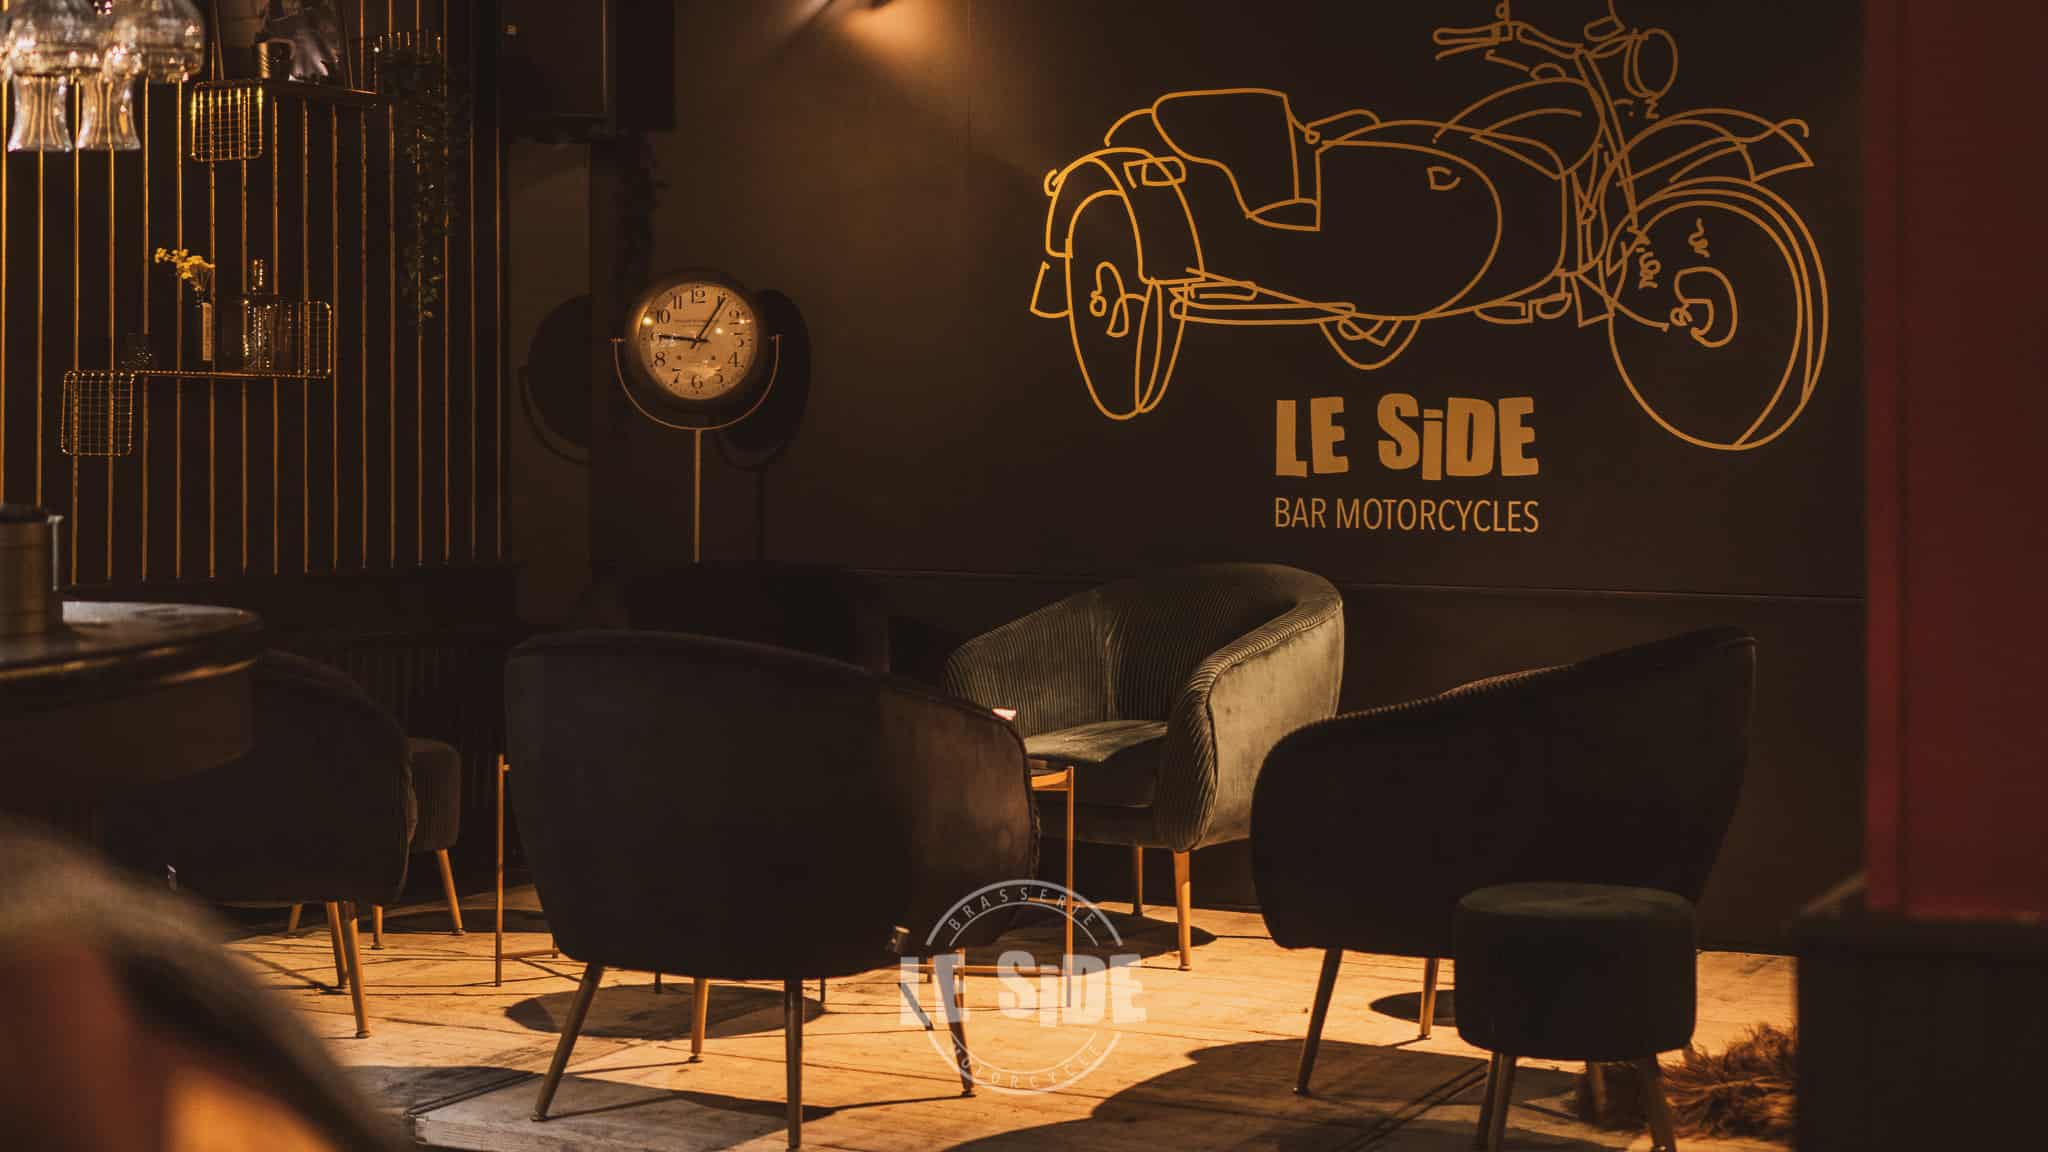 Le Side Motorcycle Bar in Ciney